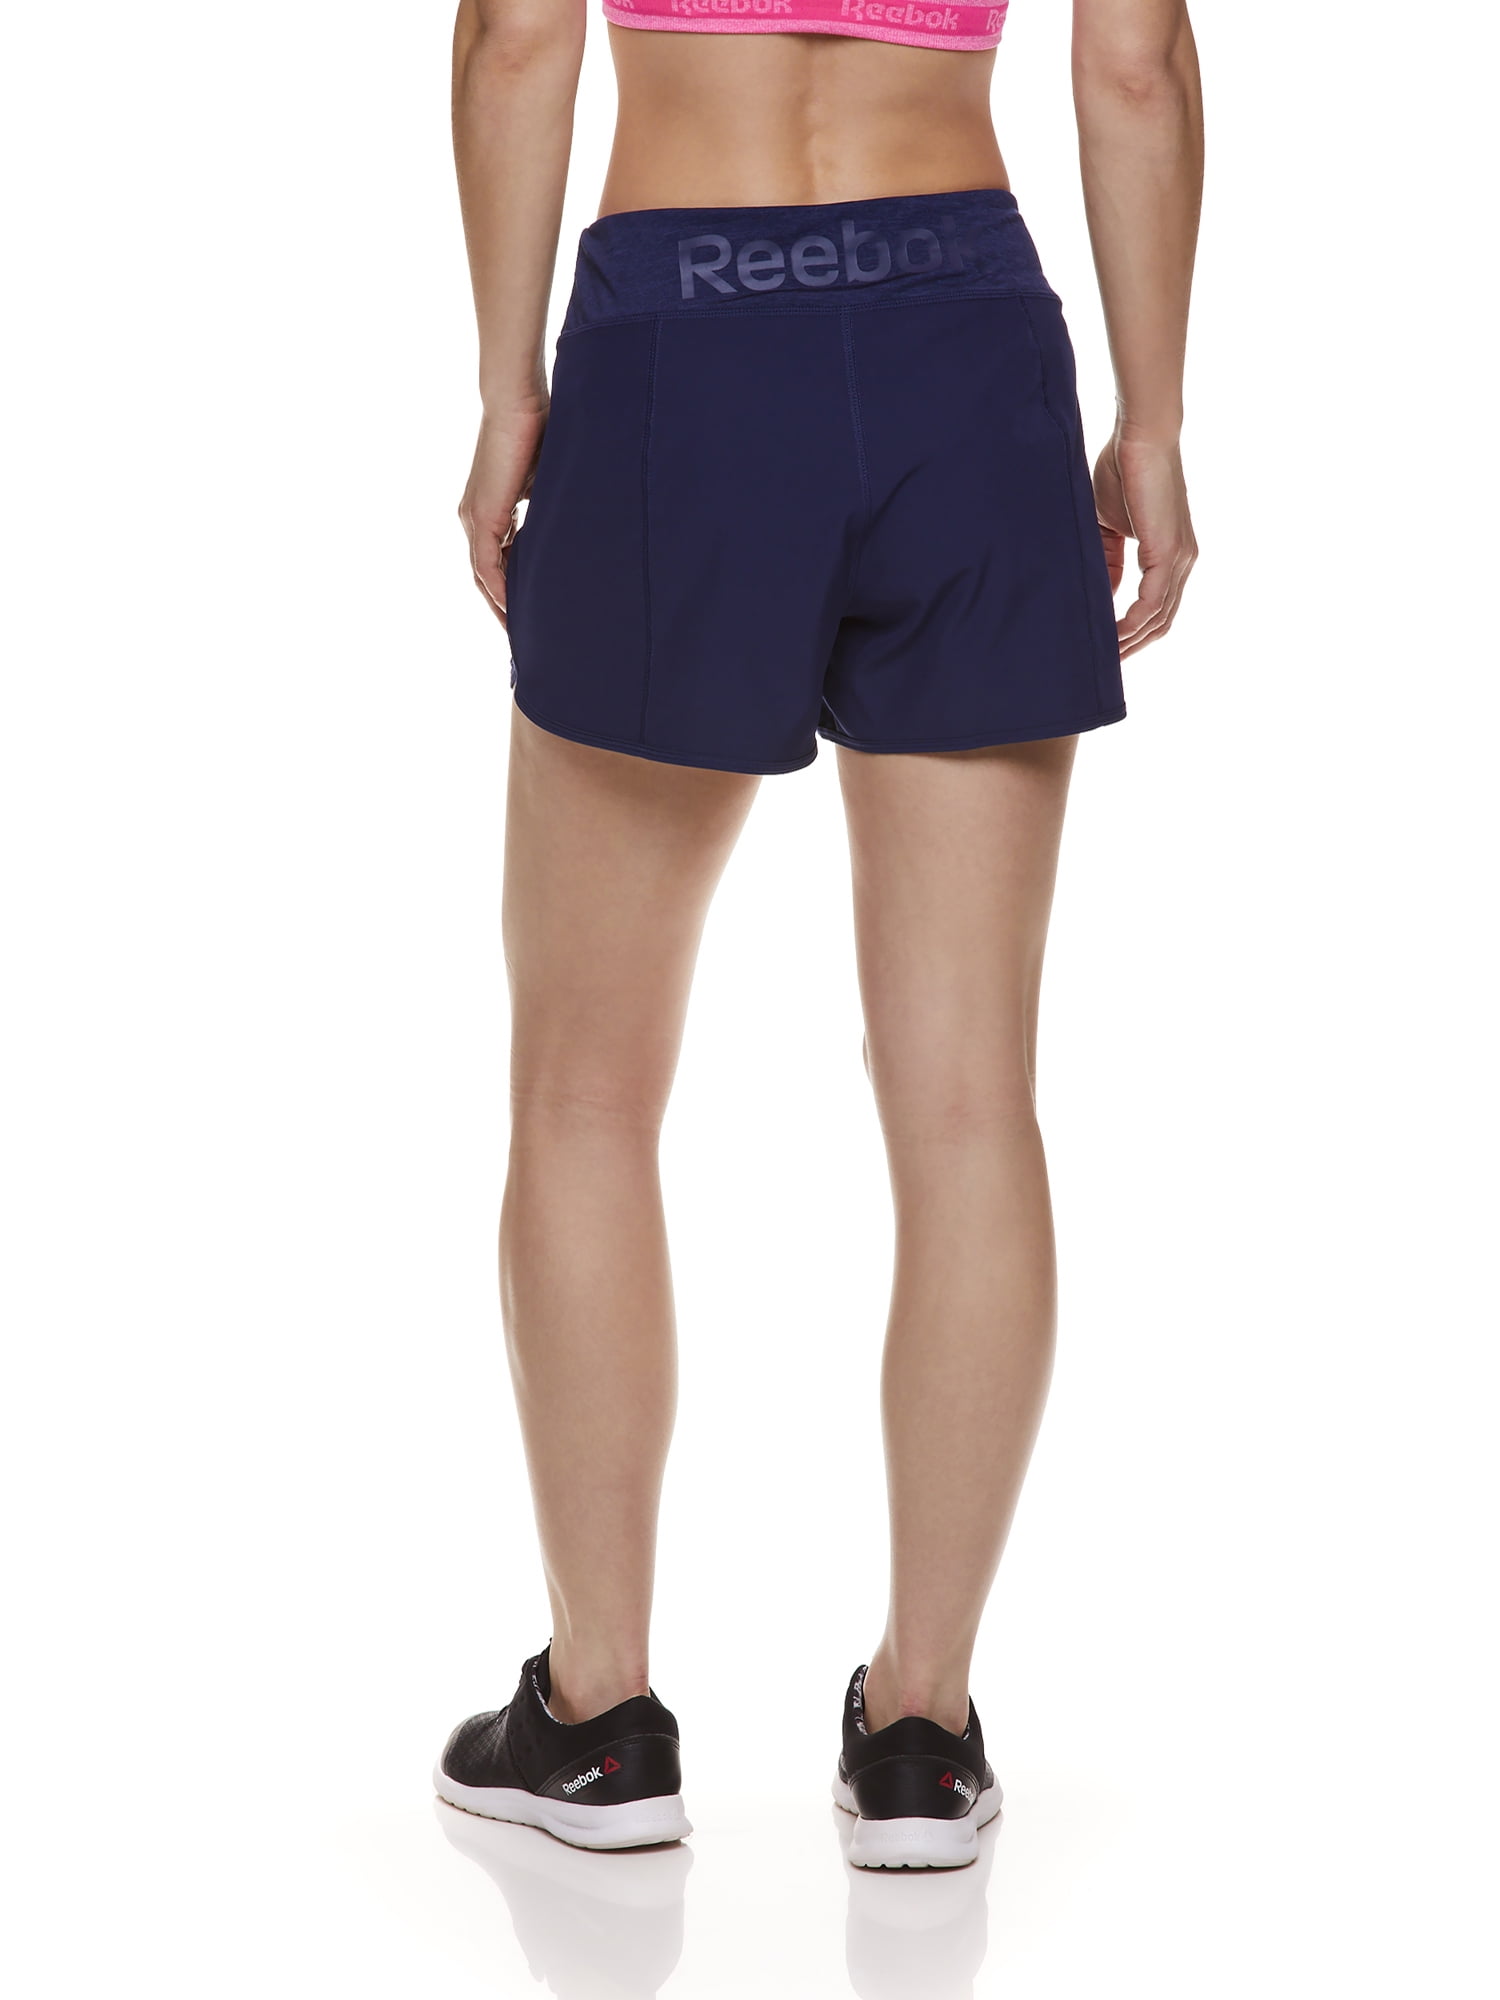 Reebok Women's Shorts